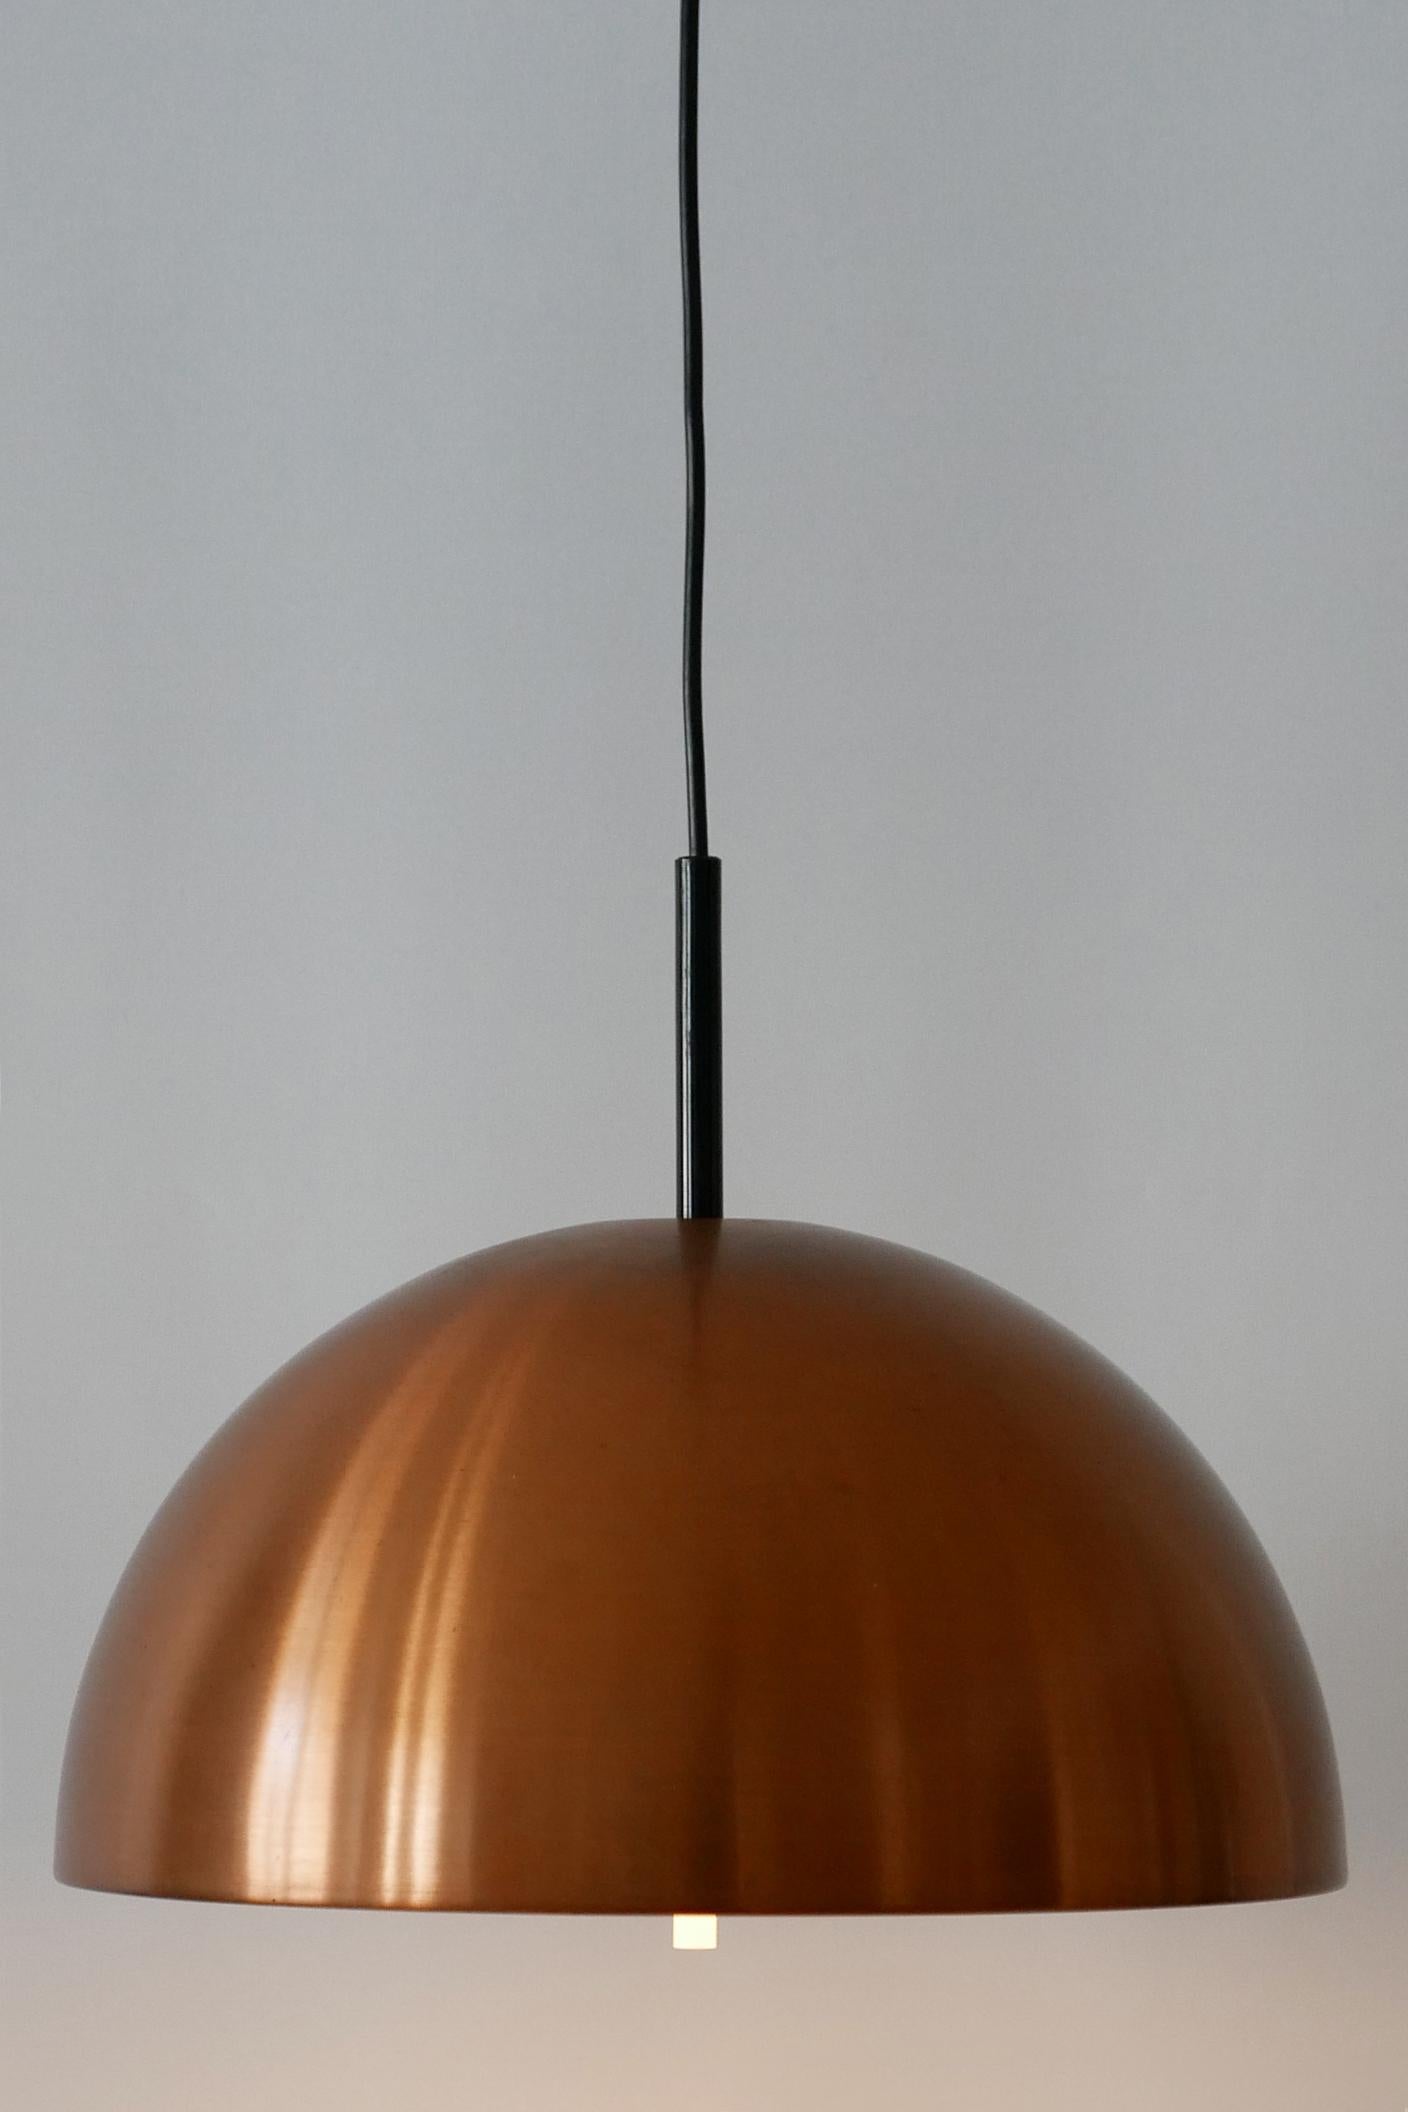 Elegant Mid-Century Modern Copper Pendant Lamp by Staff & Schwarz 1960s, Germany For Sale 5